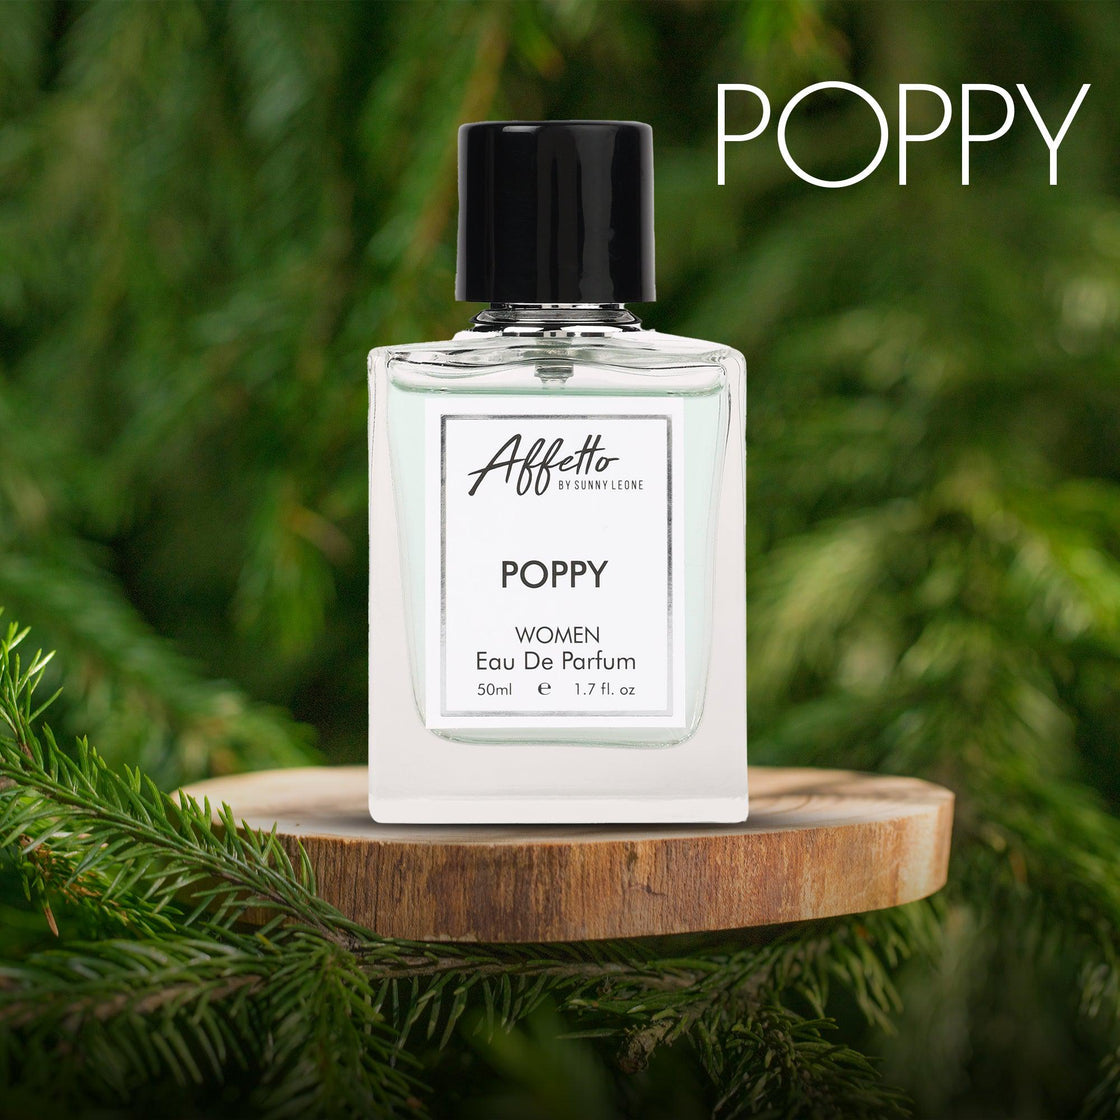 Poppy - For Her (50ml)-Perfume-cruelty free cosmetics-Sunny Leone